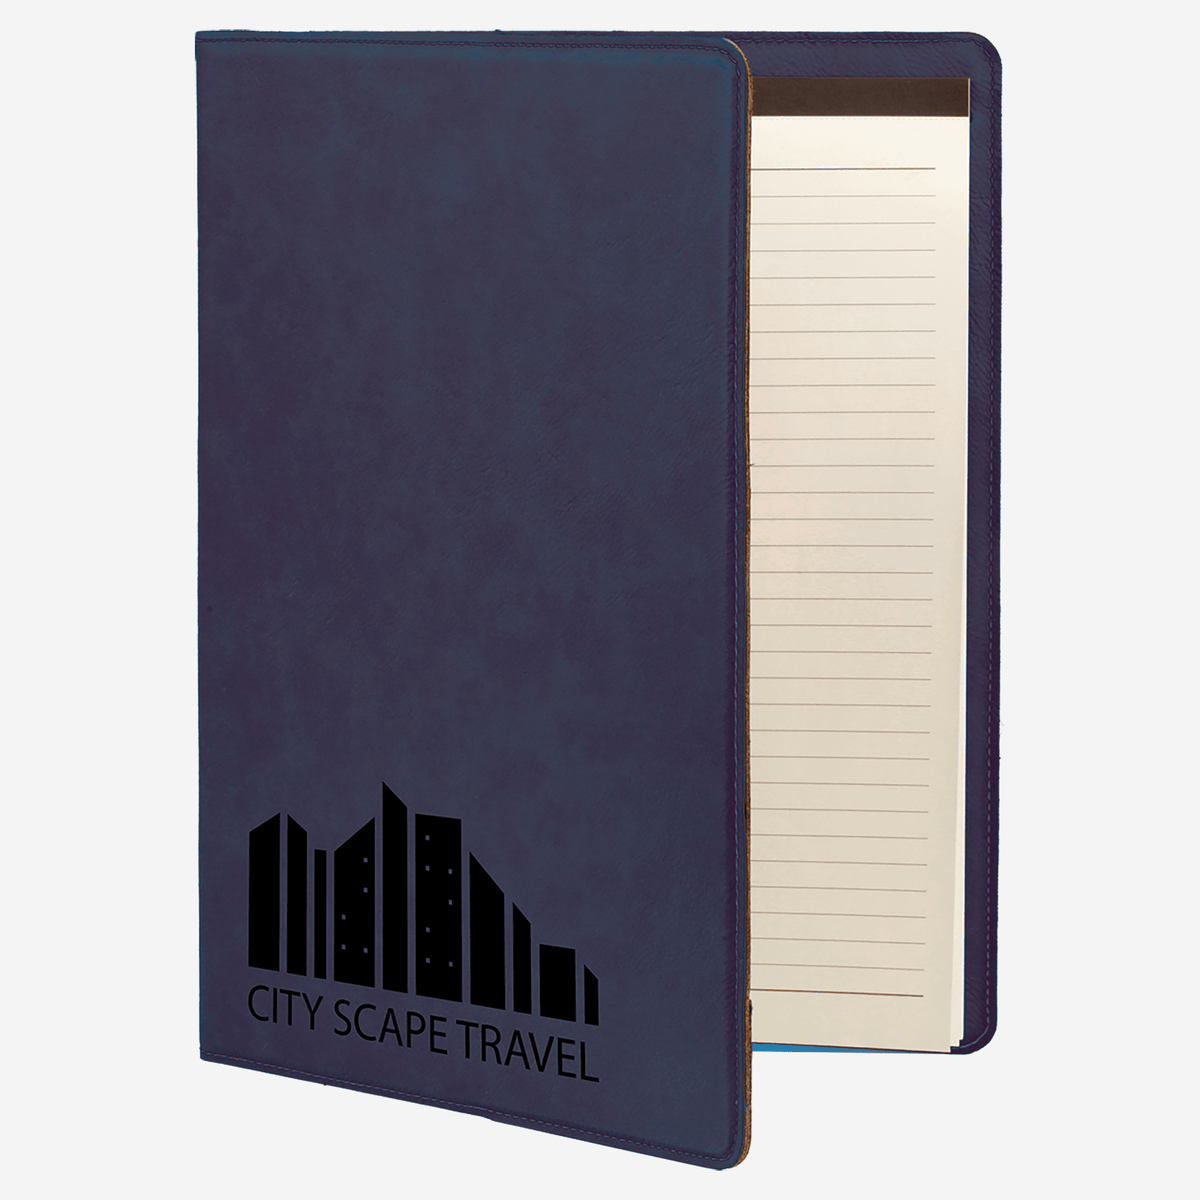 9 1/2" x 12" Laserable Leatherette Portfolio with Notepad